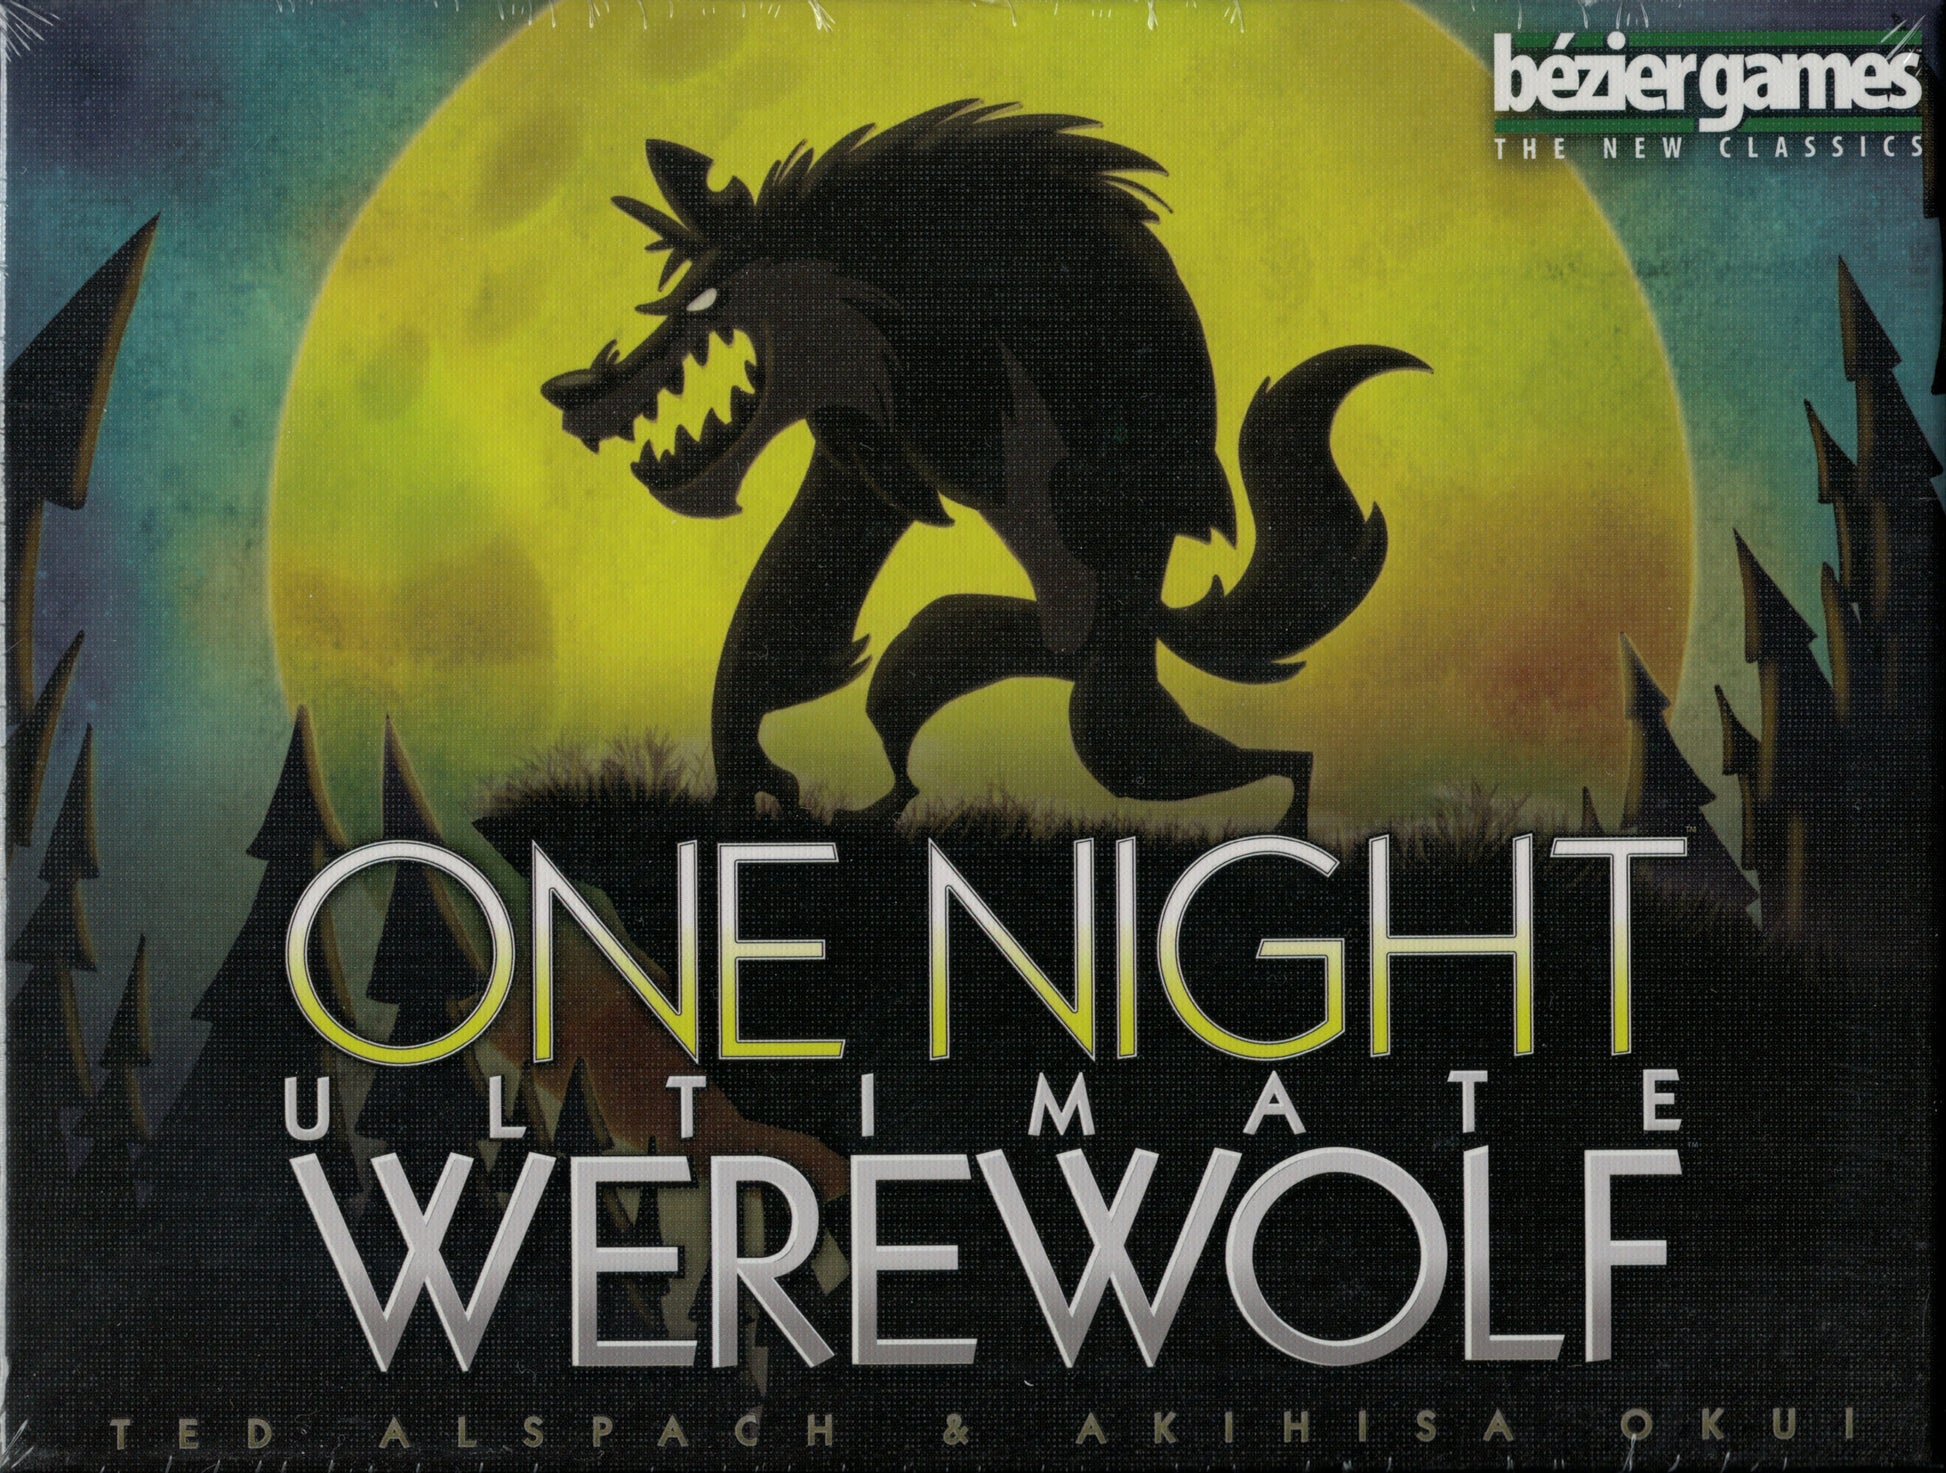 One Night Ultimate Werewolf, Board Games